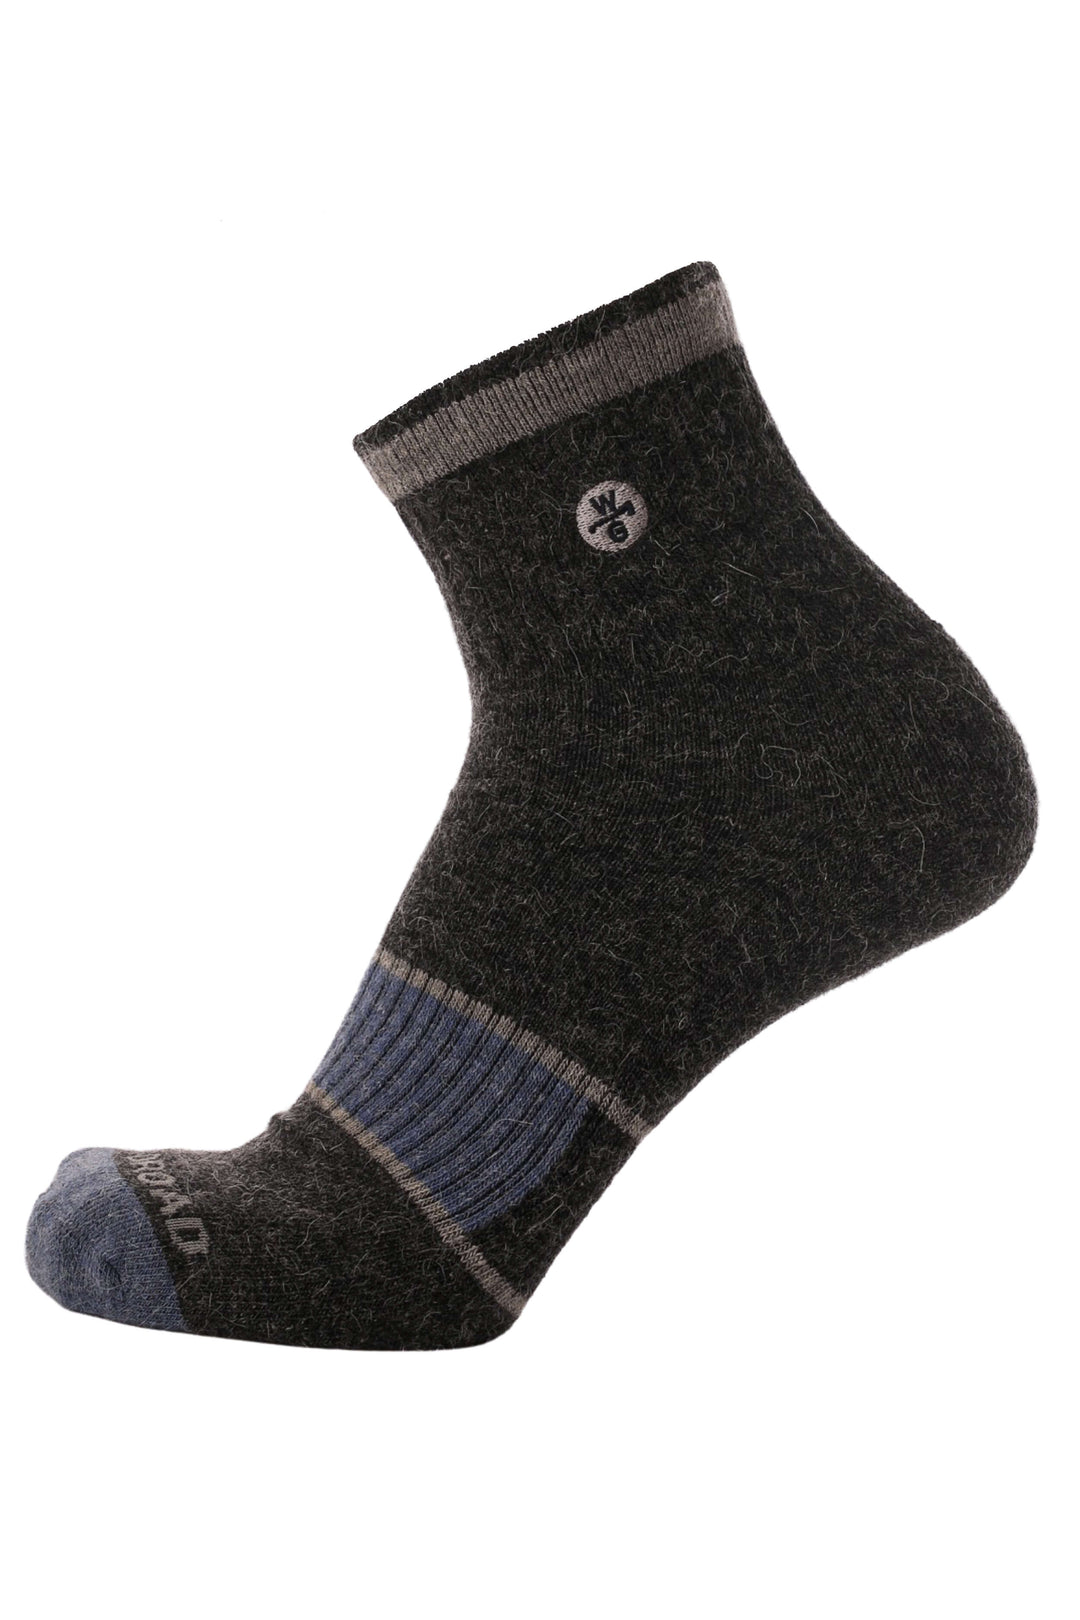 Nada Llama Quarter Socks - Alpaca Socks - Midnight Grey with Blue - Woodroad Gear Co.